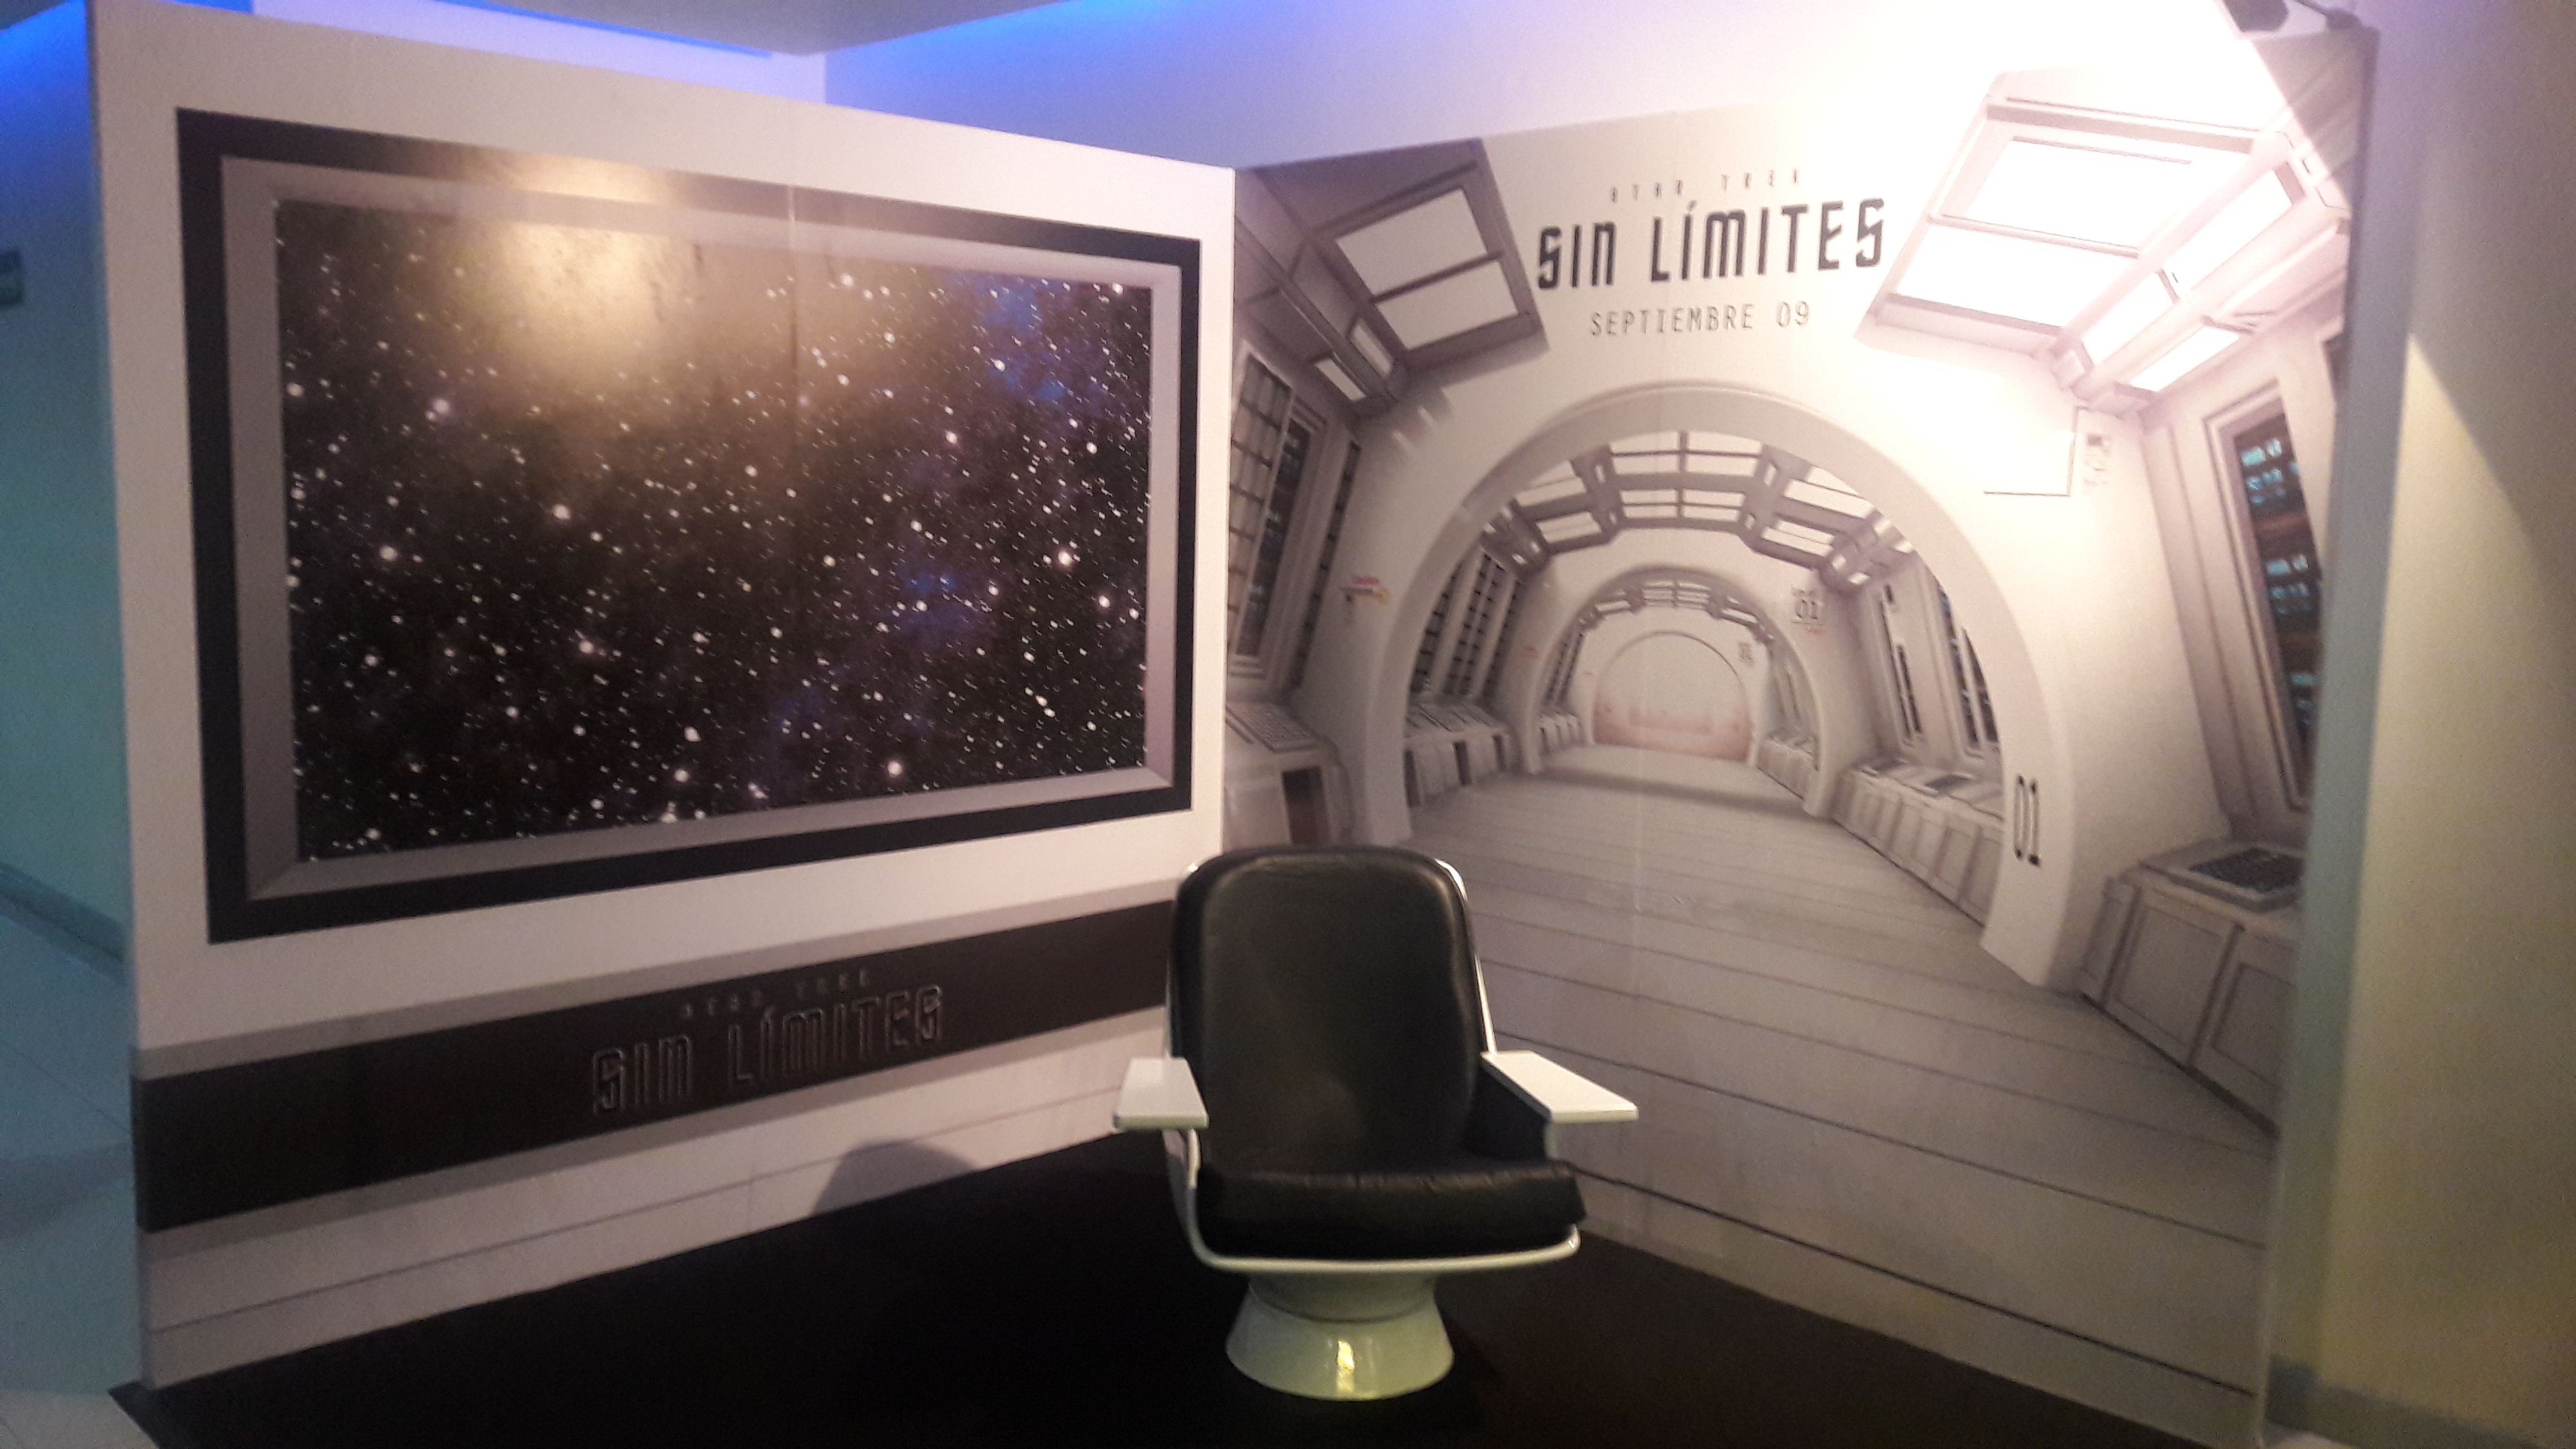 Star Trek Sin Limites lobby set up